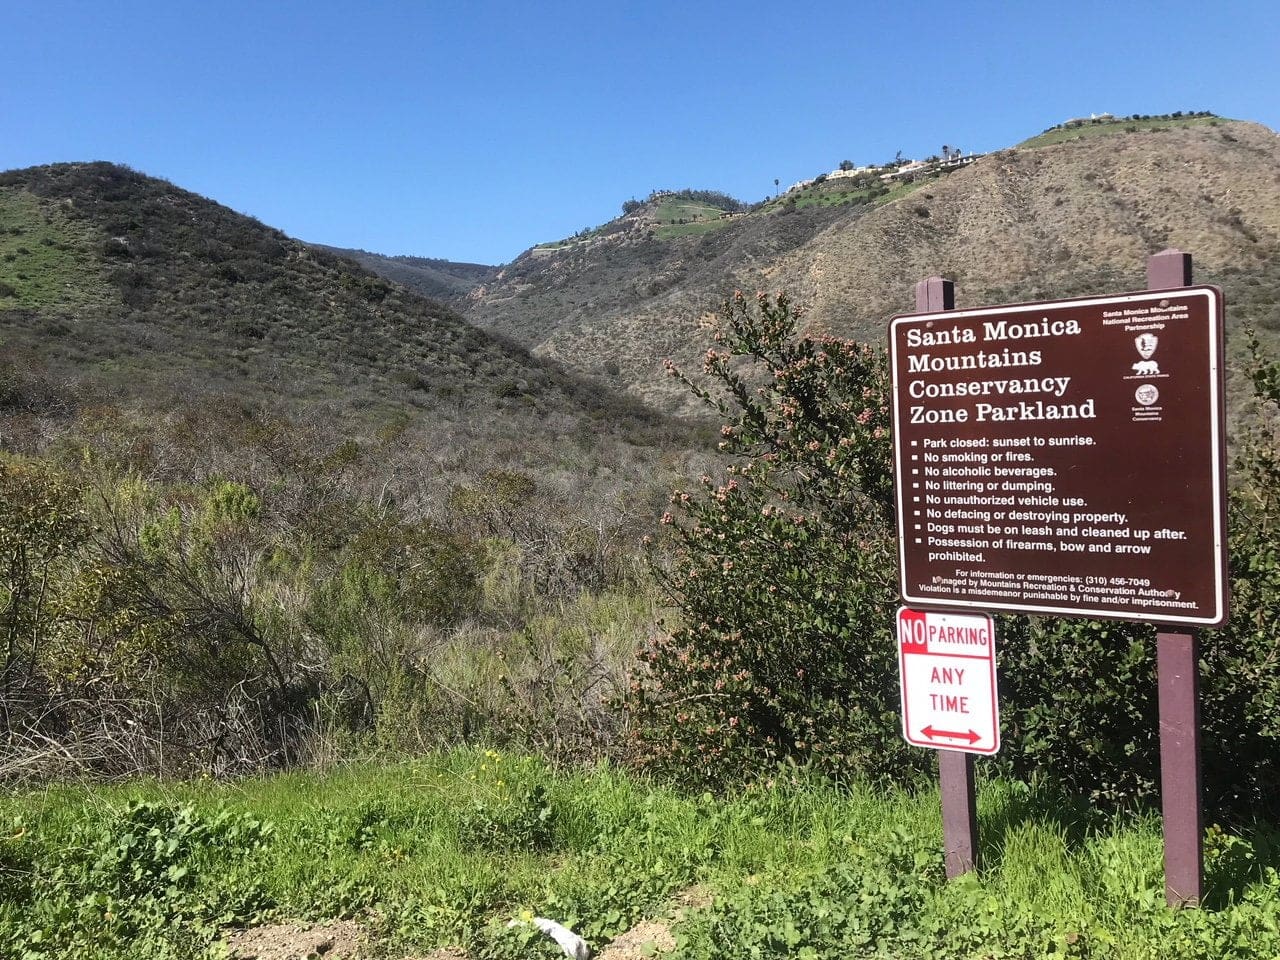 Santa Monica Mountains Conservancy Zone Parkland